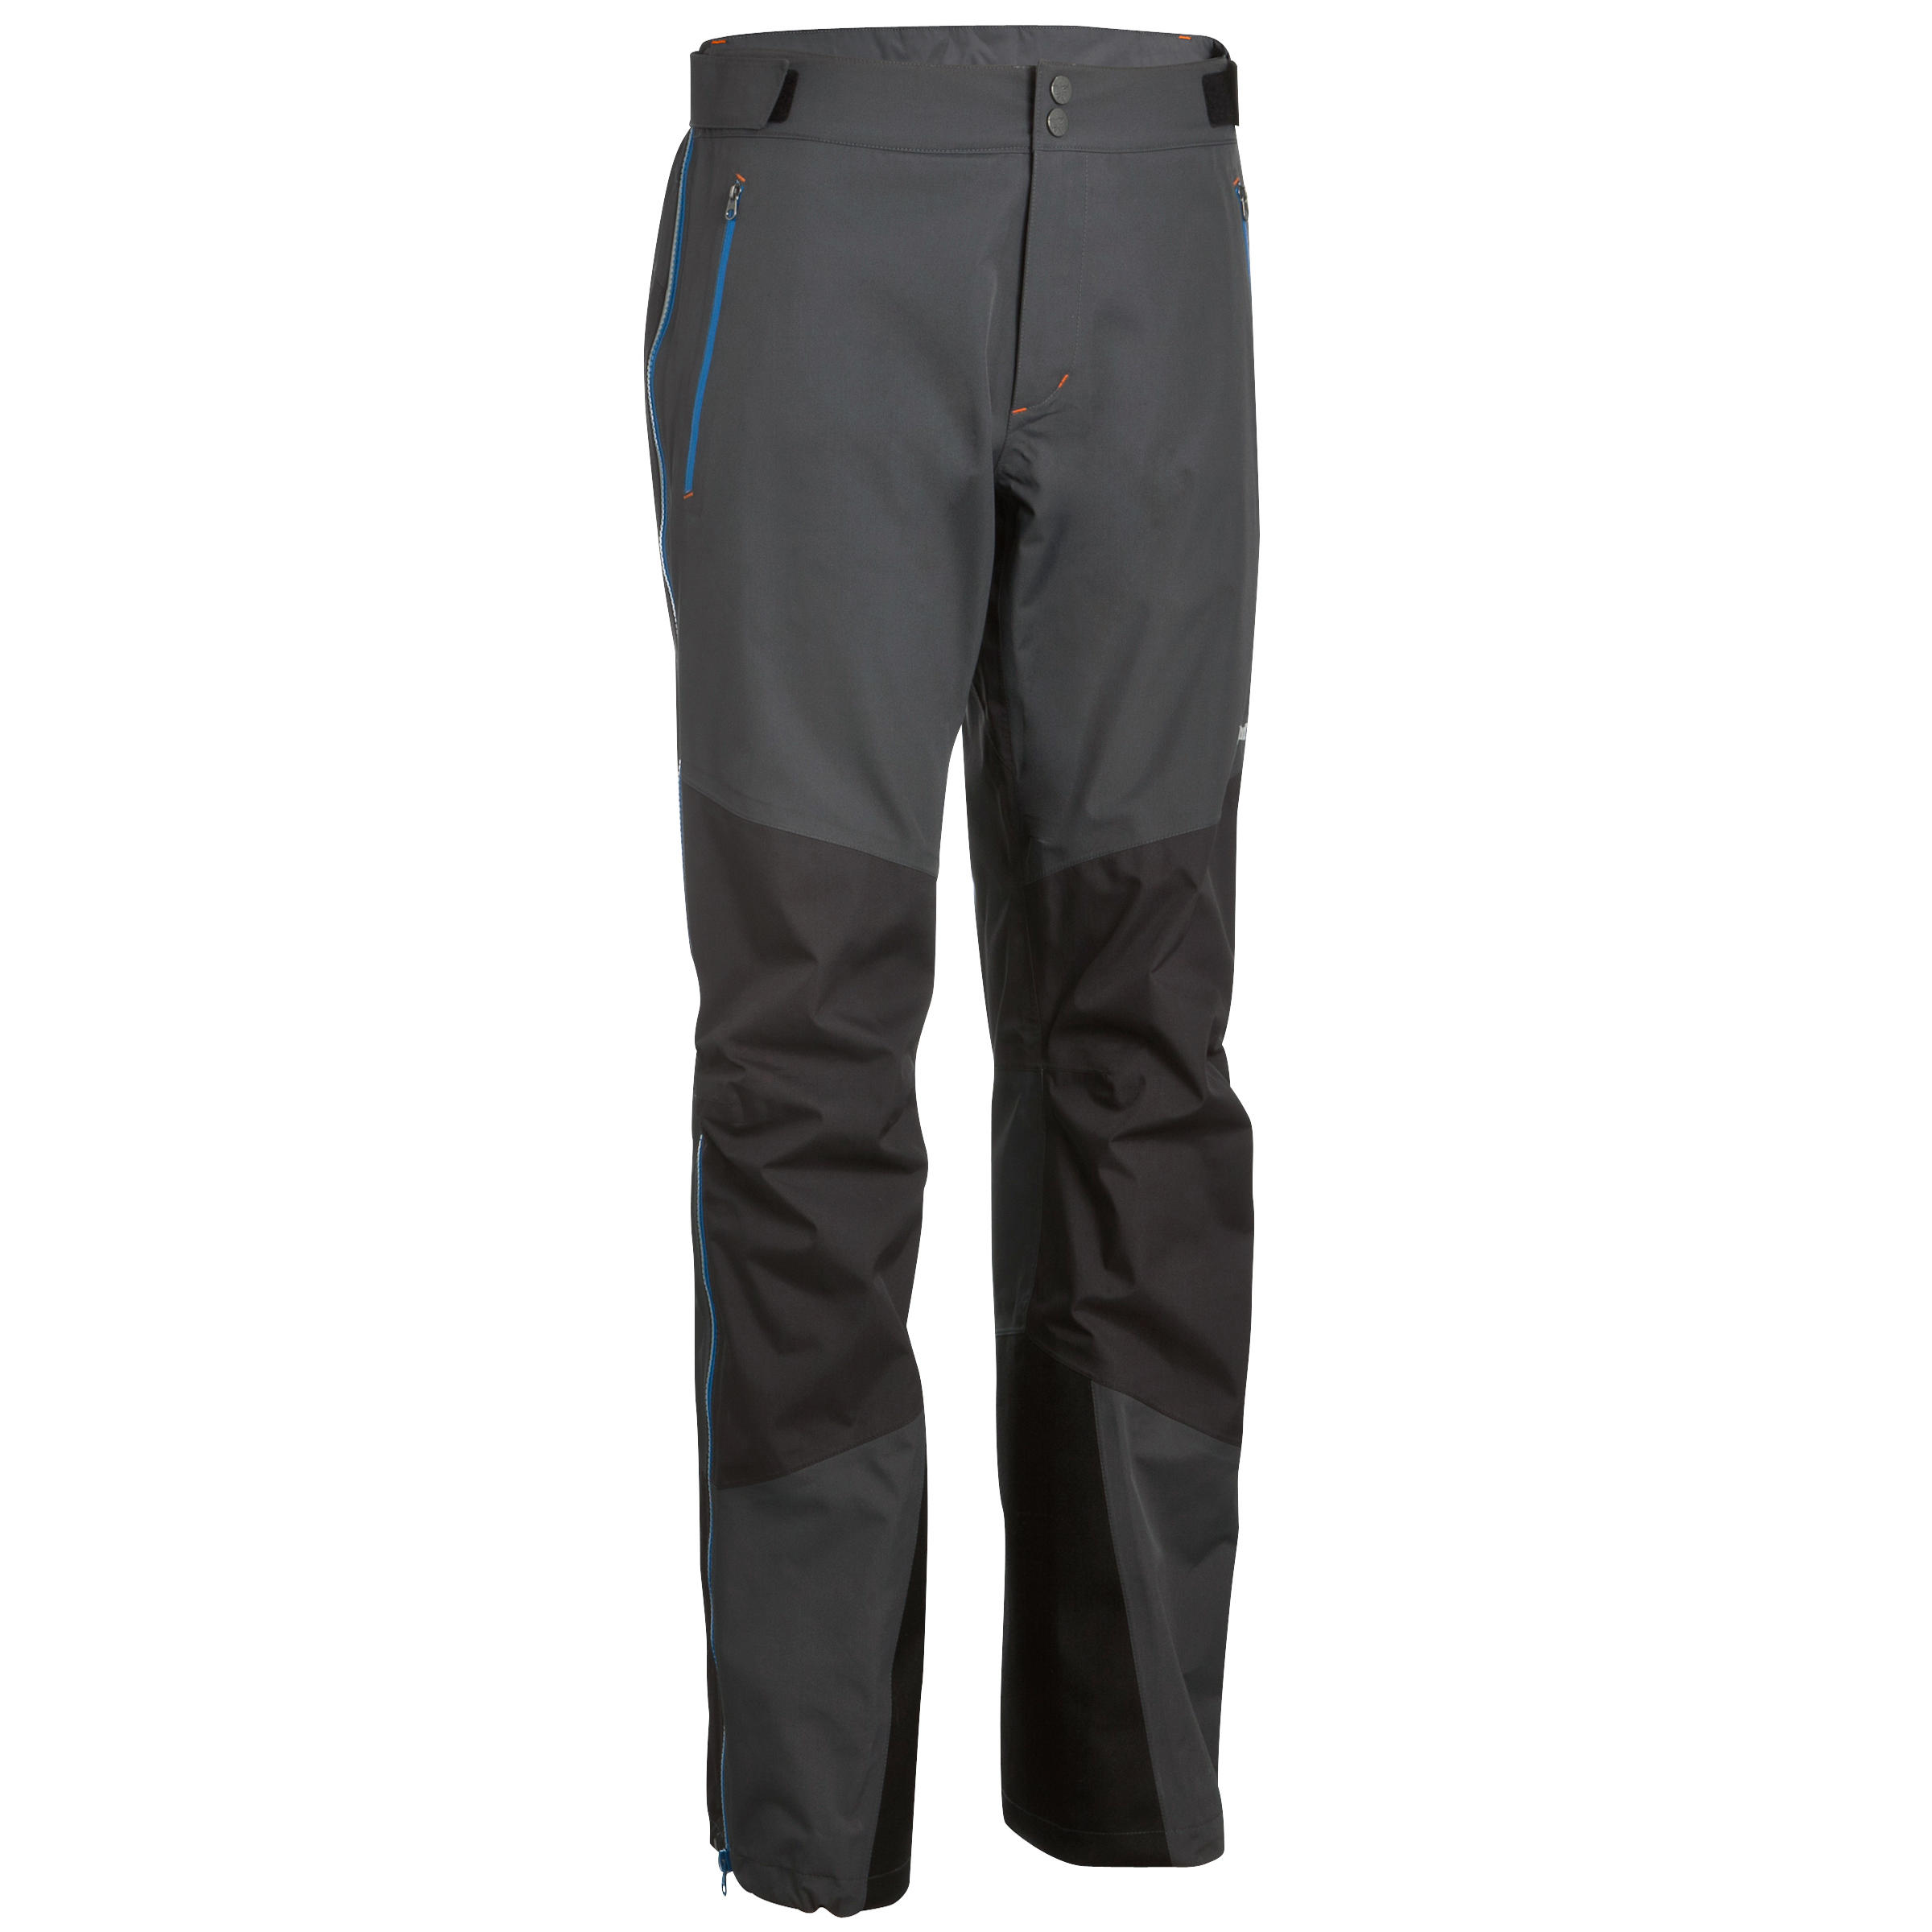 SIMOND Men's Mountaineering Waterproof Overtrousers - Alpinism Grey